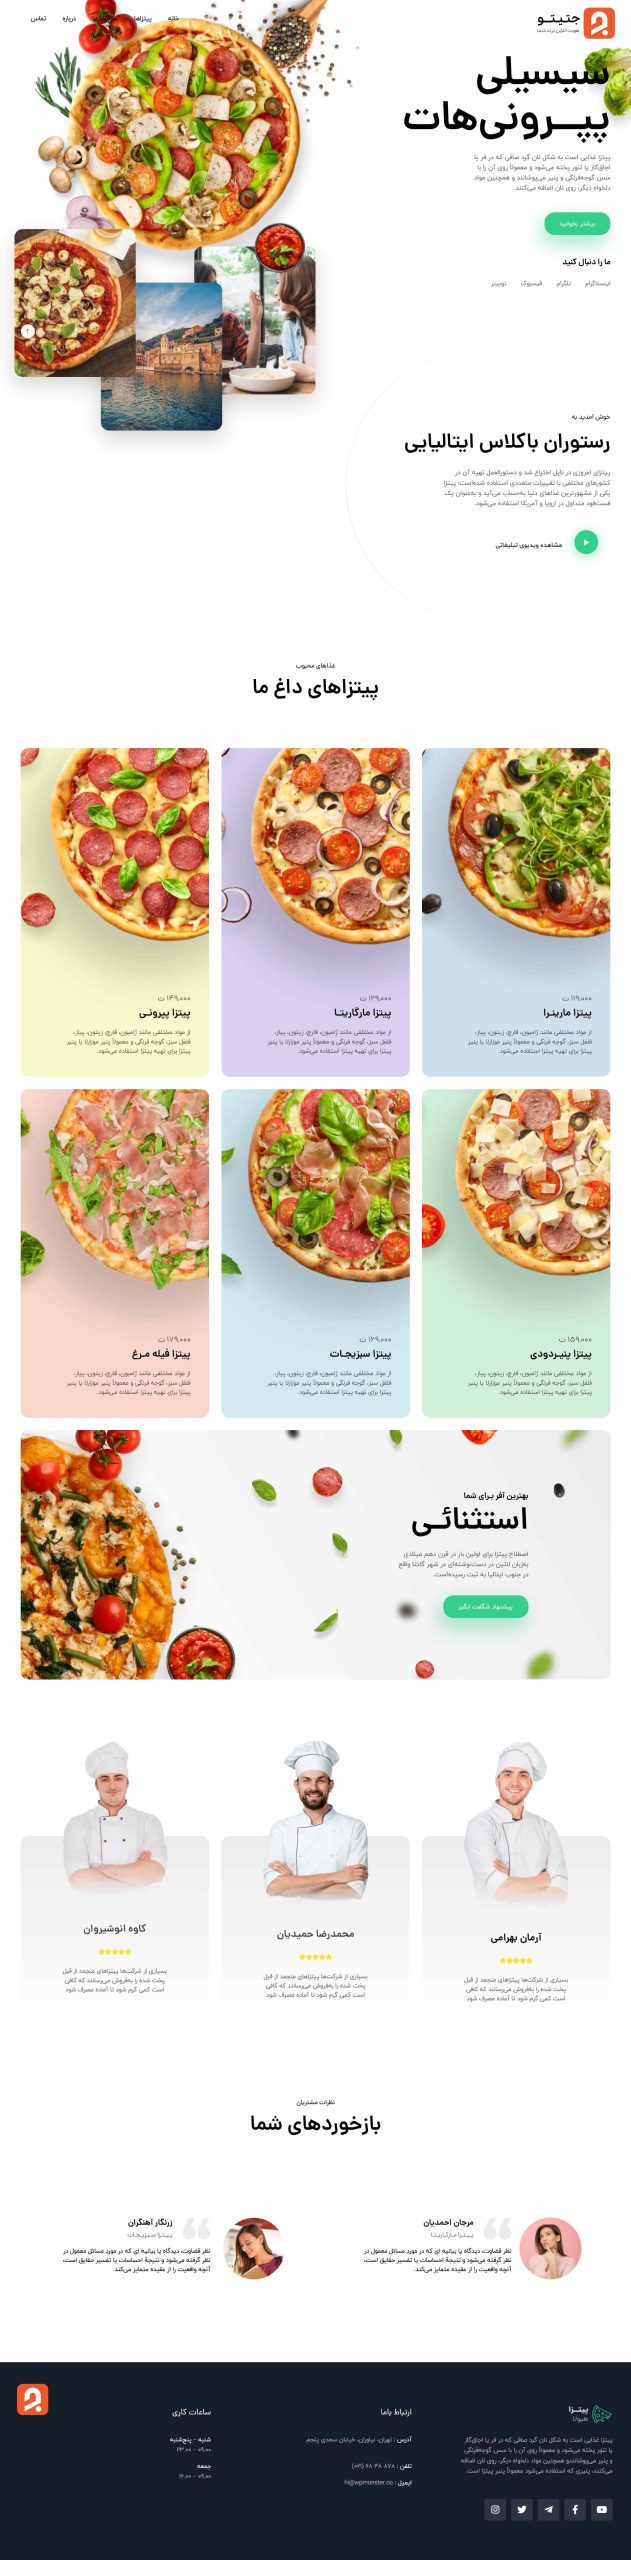 طراحی سایت سفارش پیتزا - جتیتو